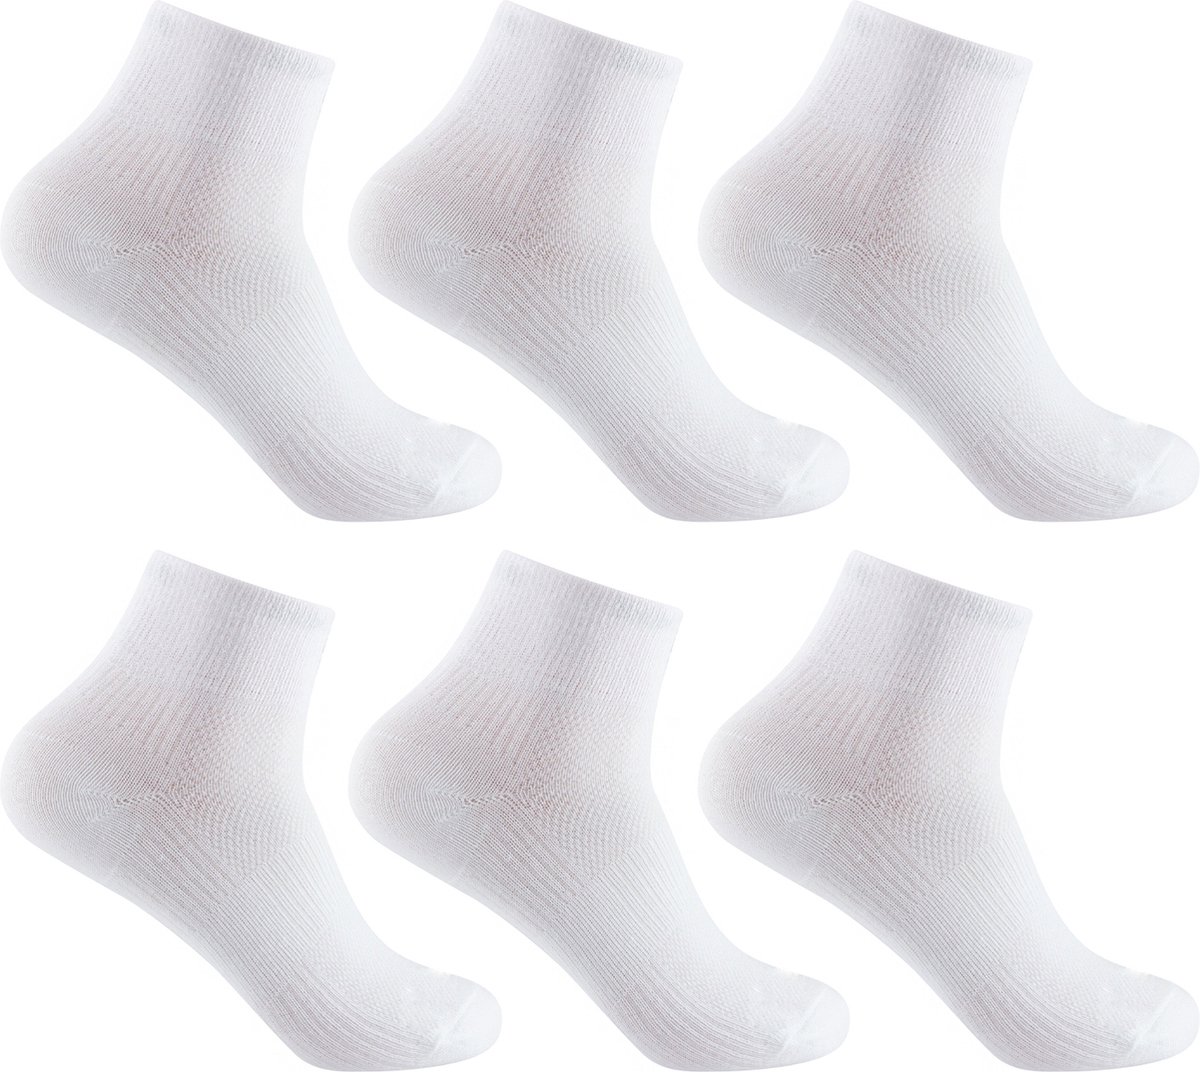 Sportsokken - Wit - 6 paar - maat 38-40.5 - Vitility High Comfort - sokken - wandelsokken